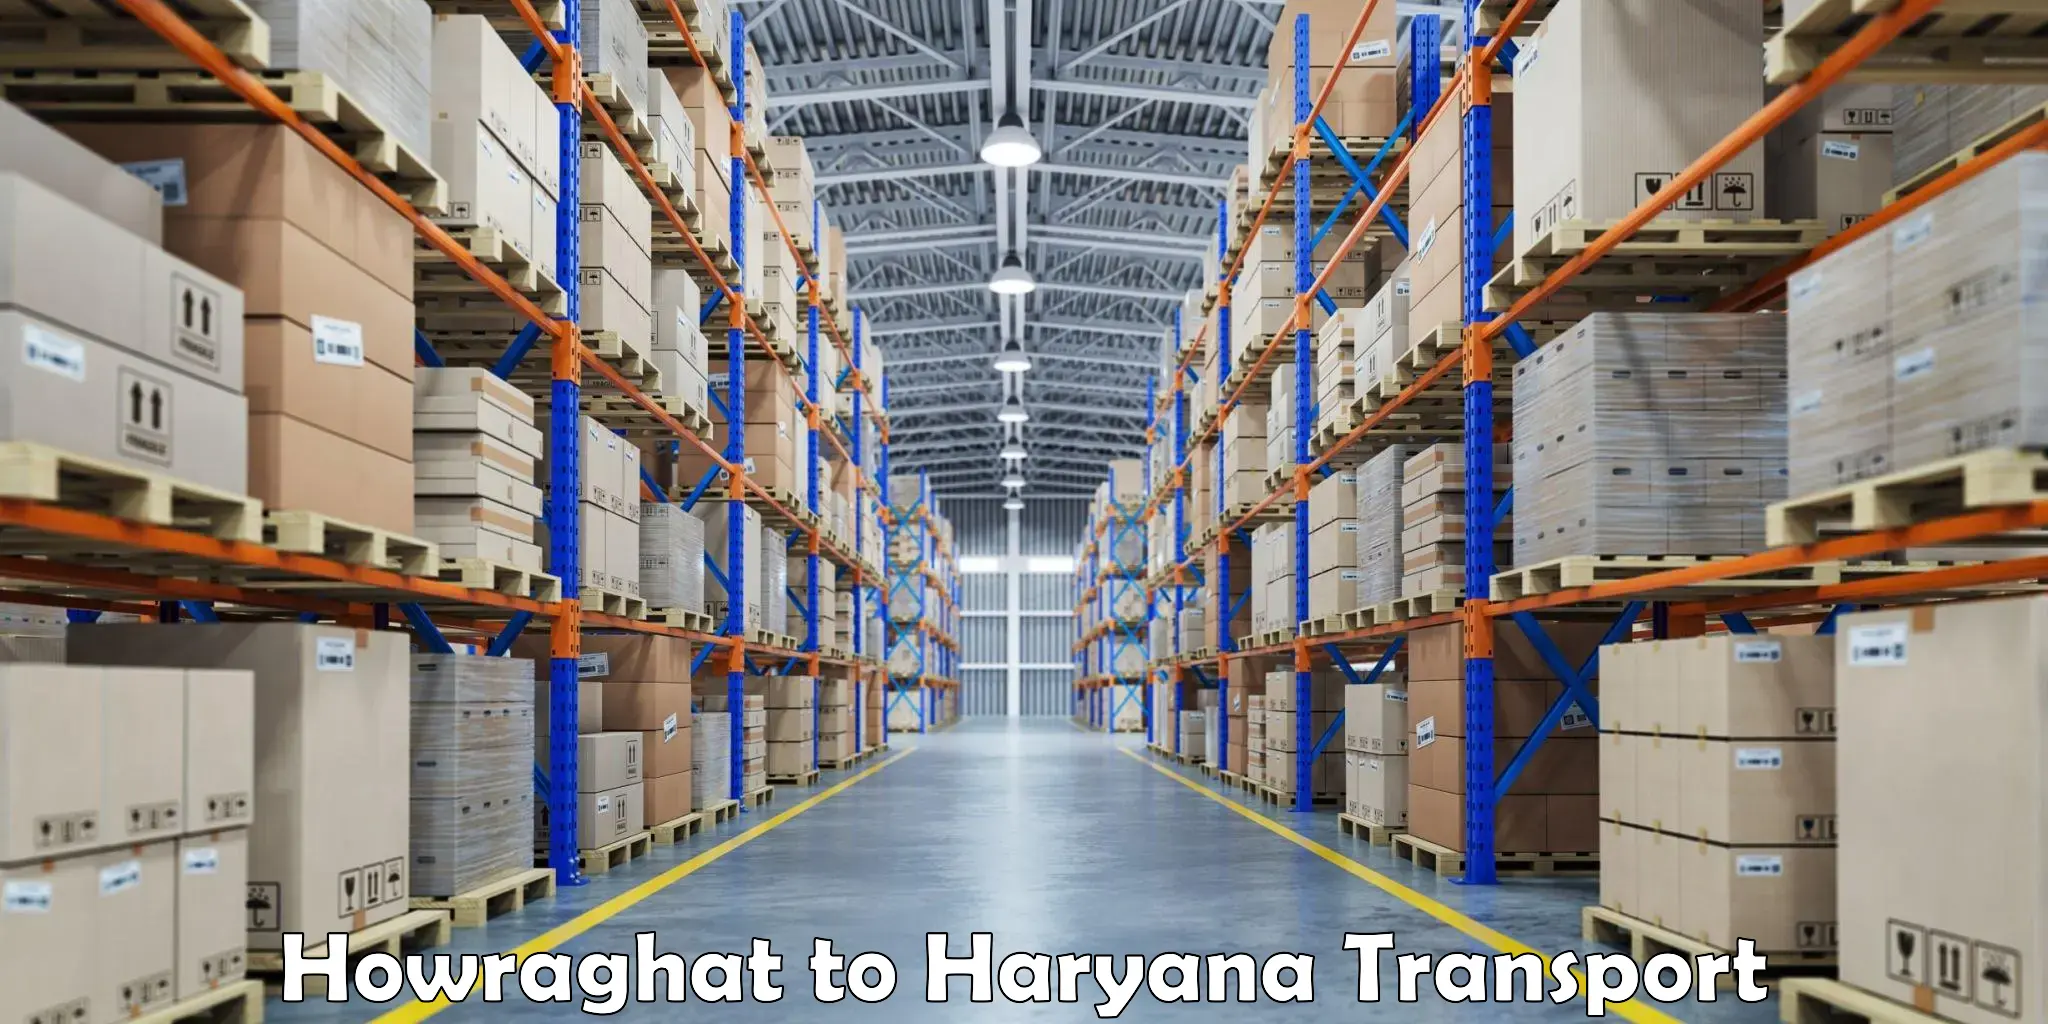 Furniture transport service Howraghat to Gurgaon